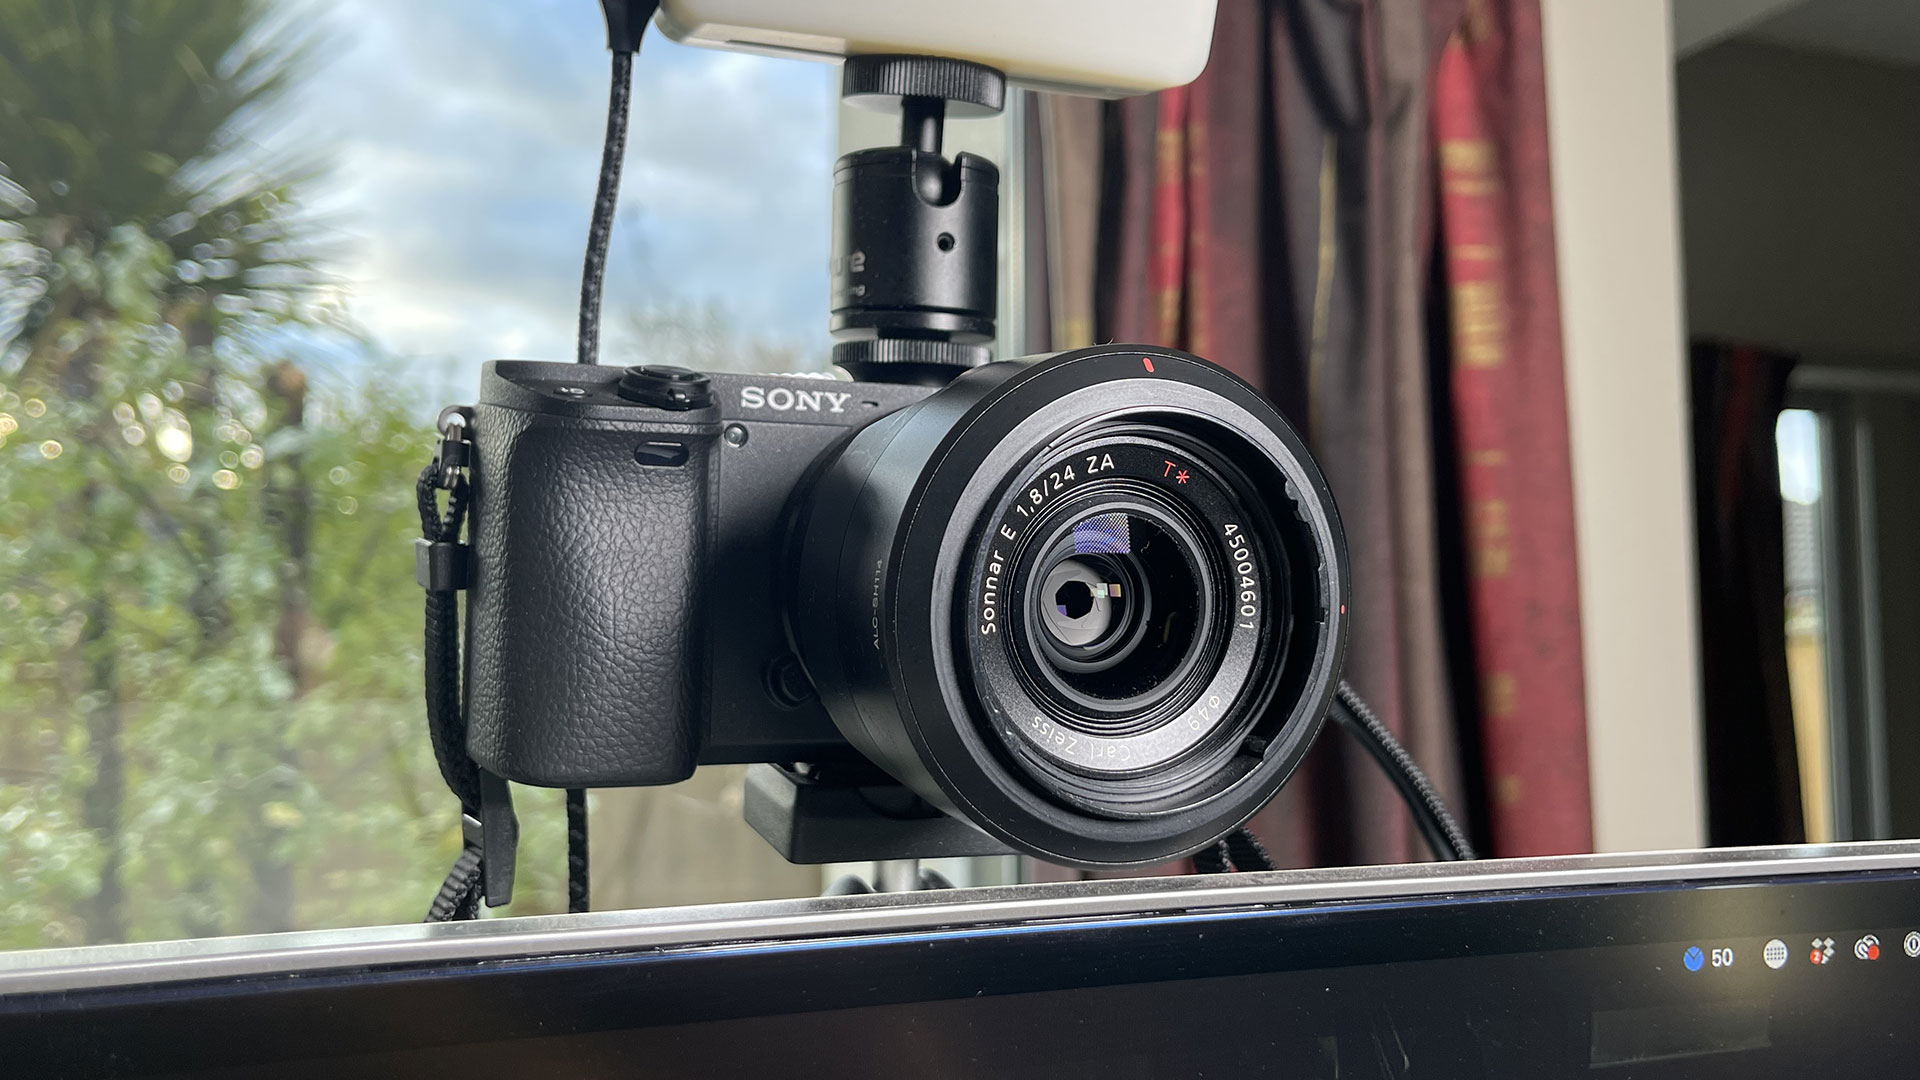 Sony A6400 24mm F18 Lens Carl Zeiss Sonnar Entrepreneur Decision Maker Connector Podcaster Educator